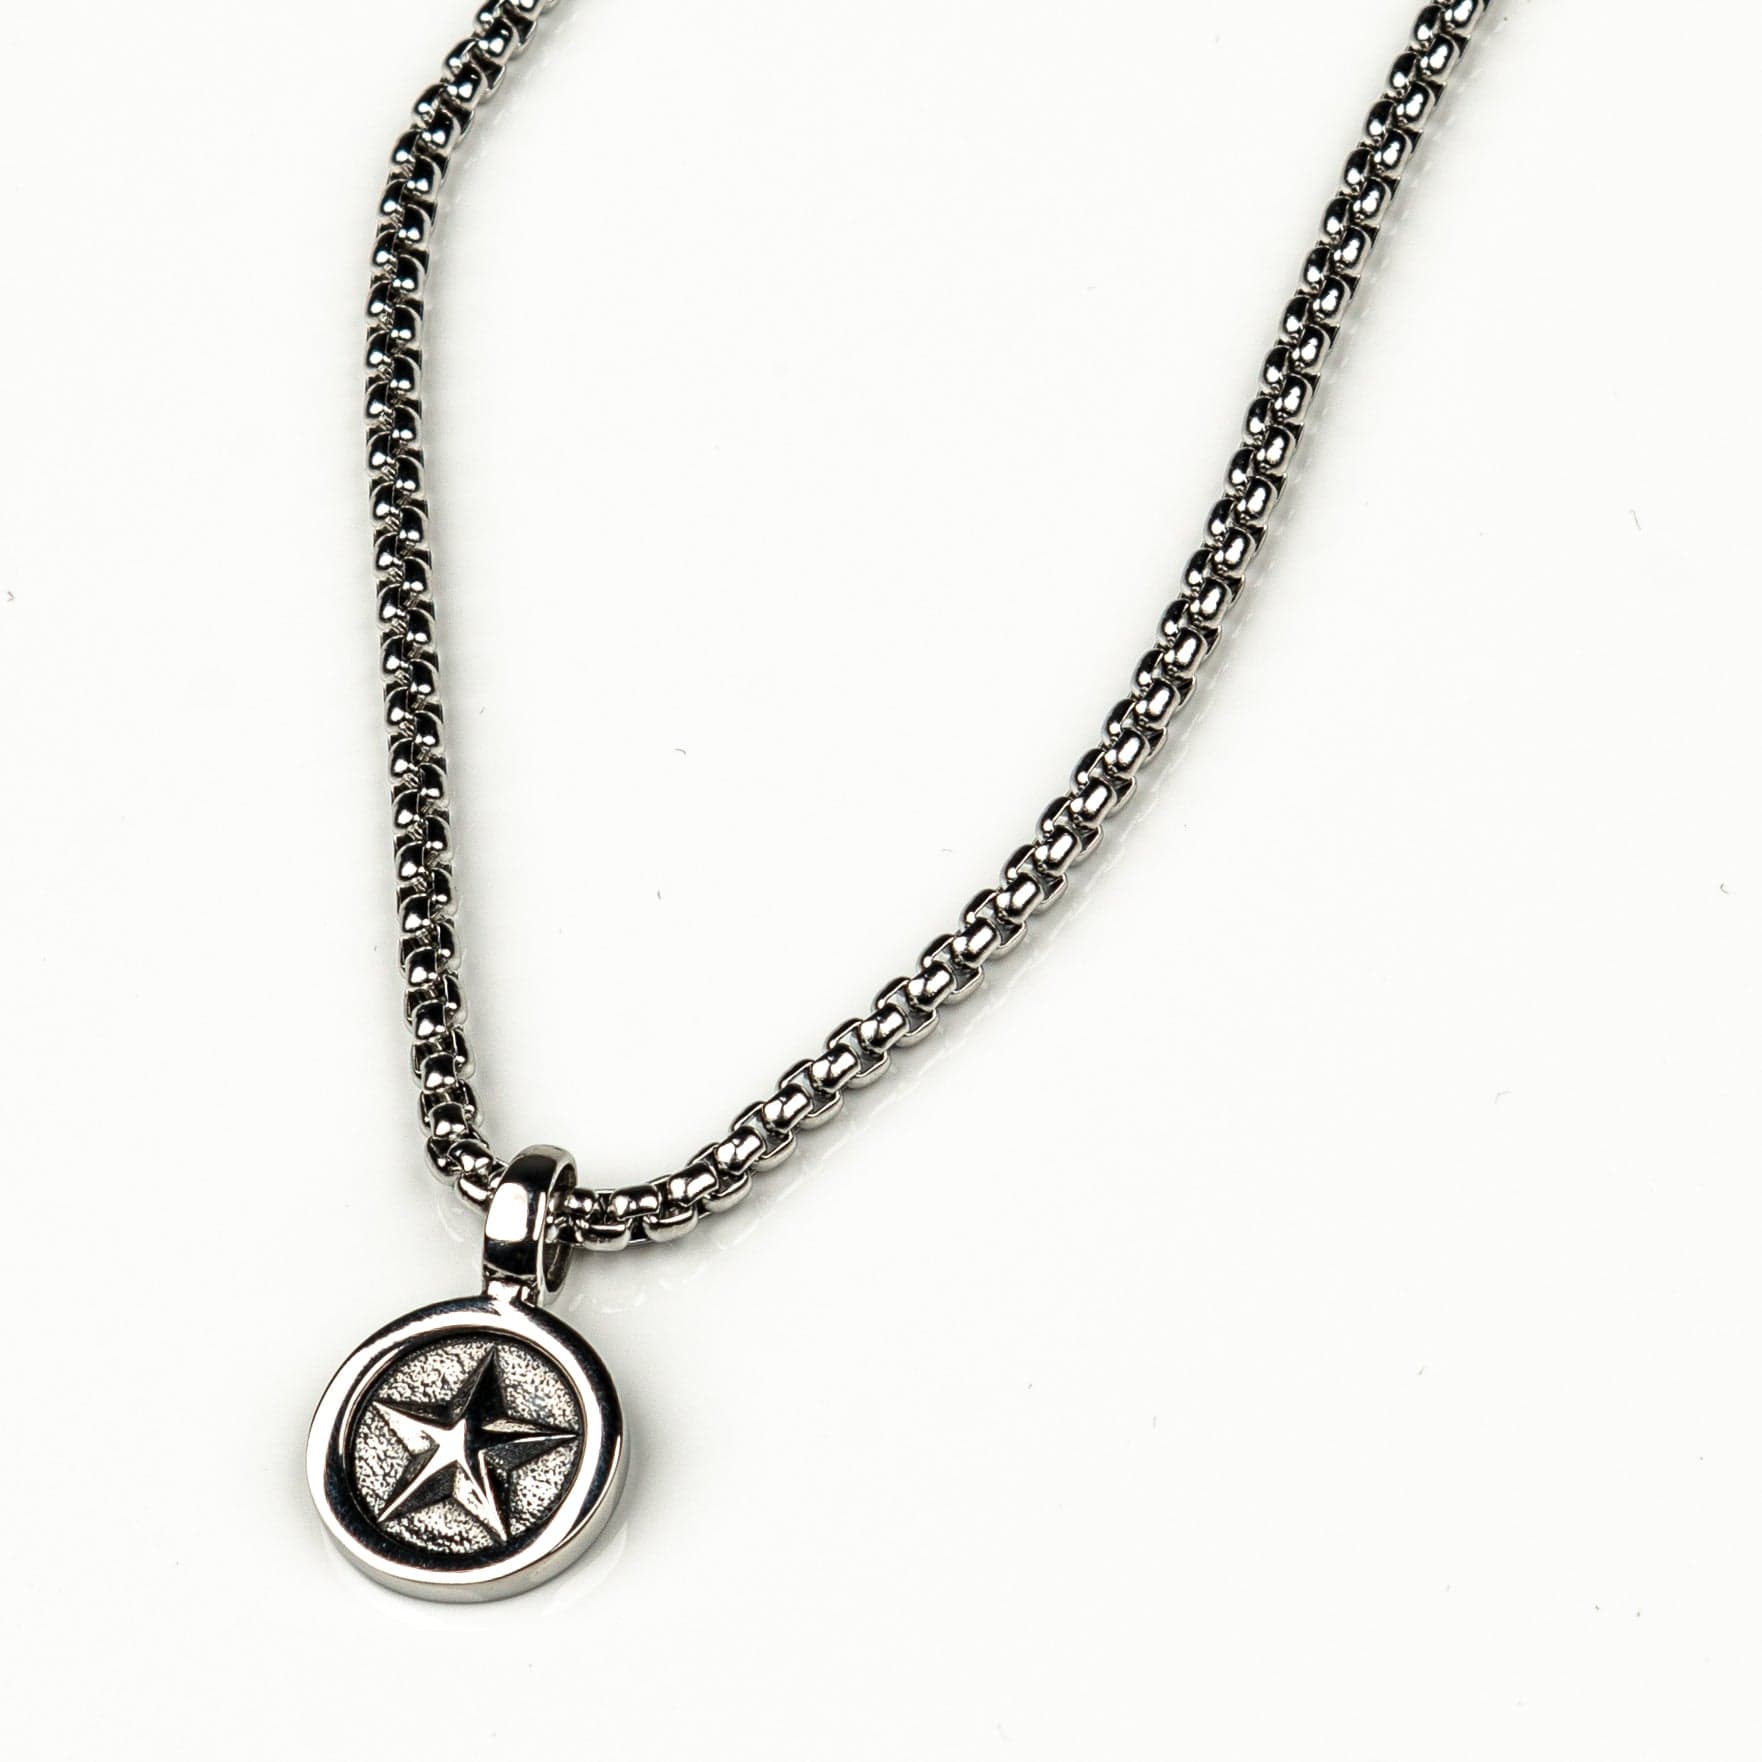 Wornstar Clothing Necklace Star Chain Necklace